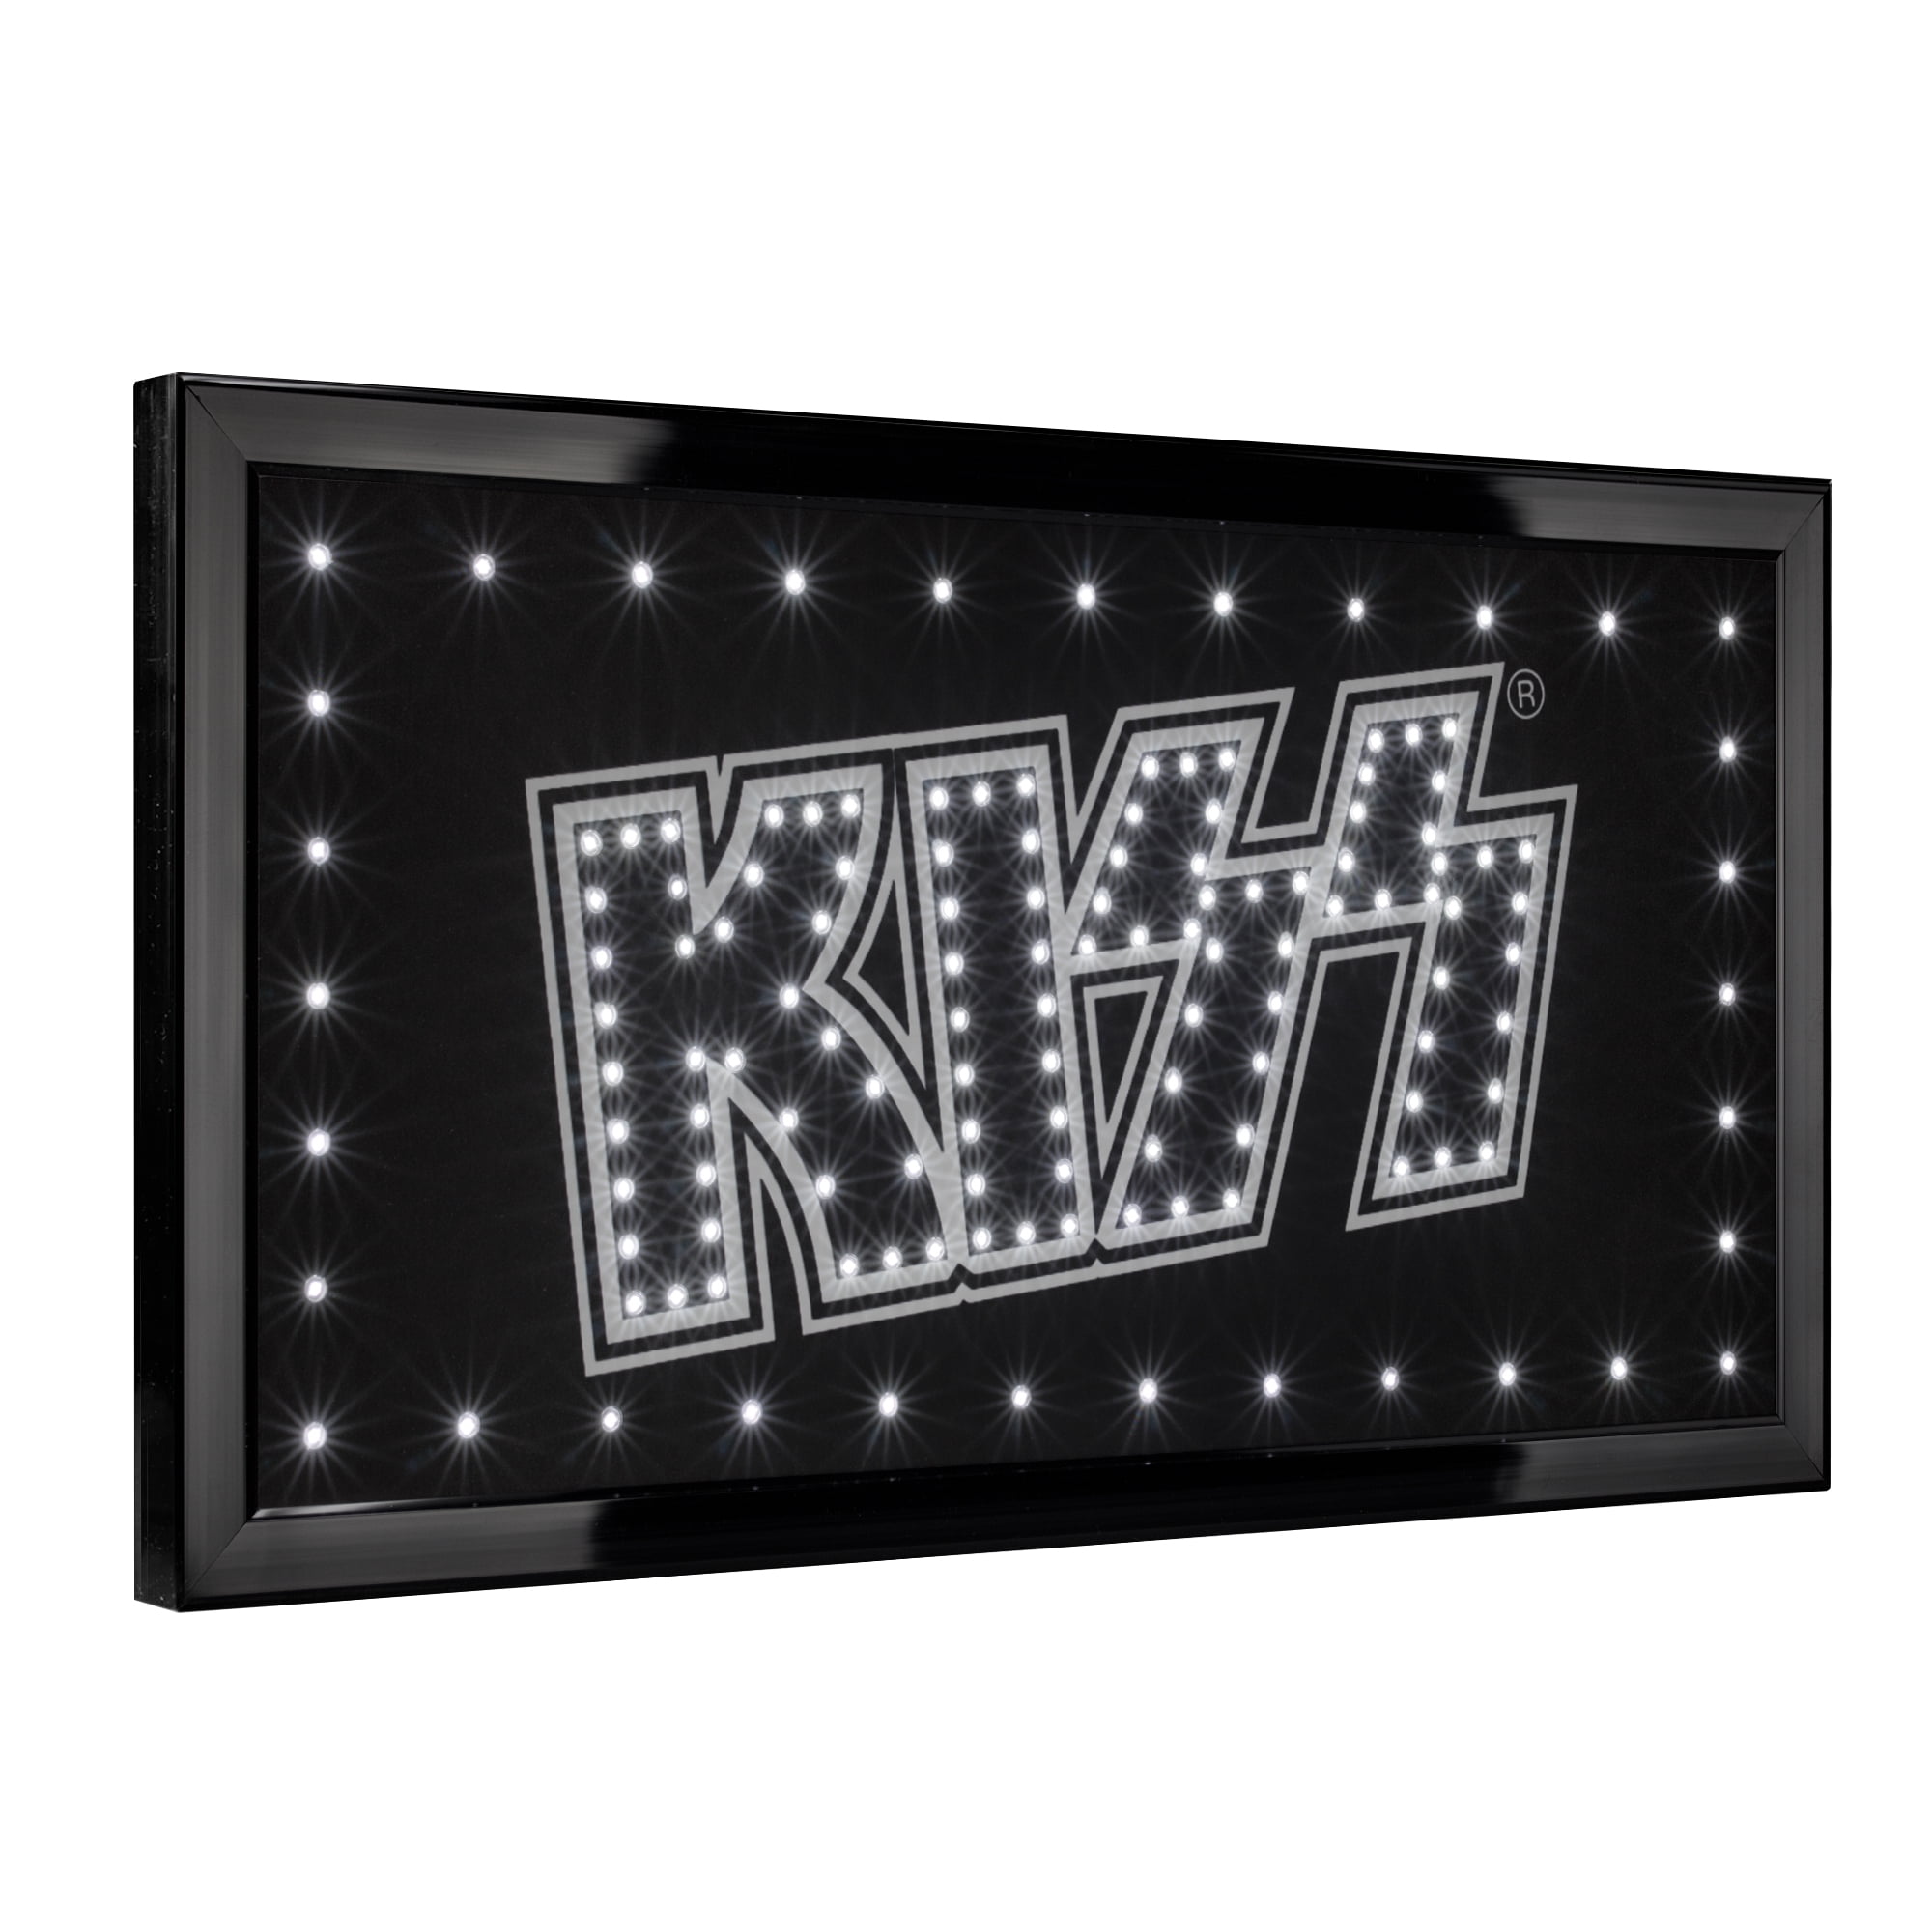 New Kiss Love Neon Sign Acrylic 14"x10" Light Lamp Artwork Gift Wall Room Decor 